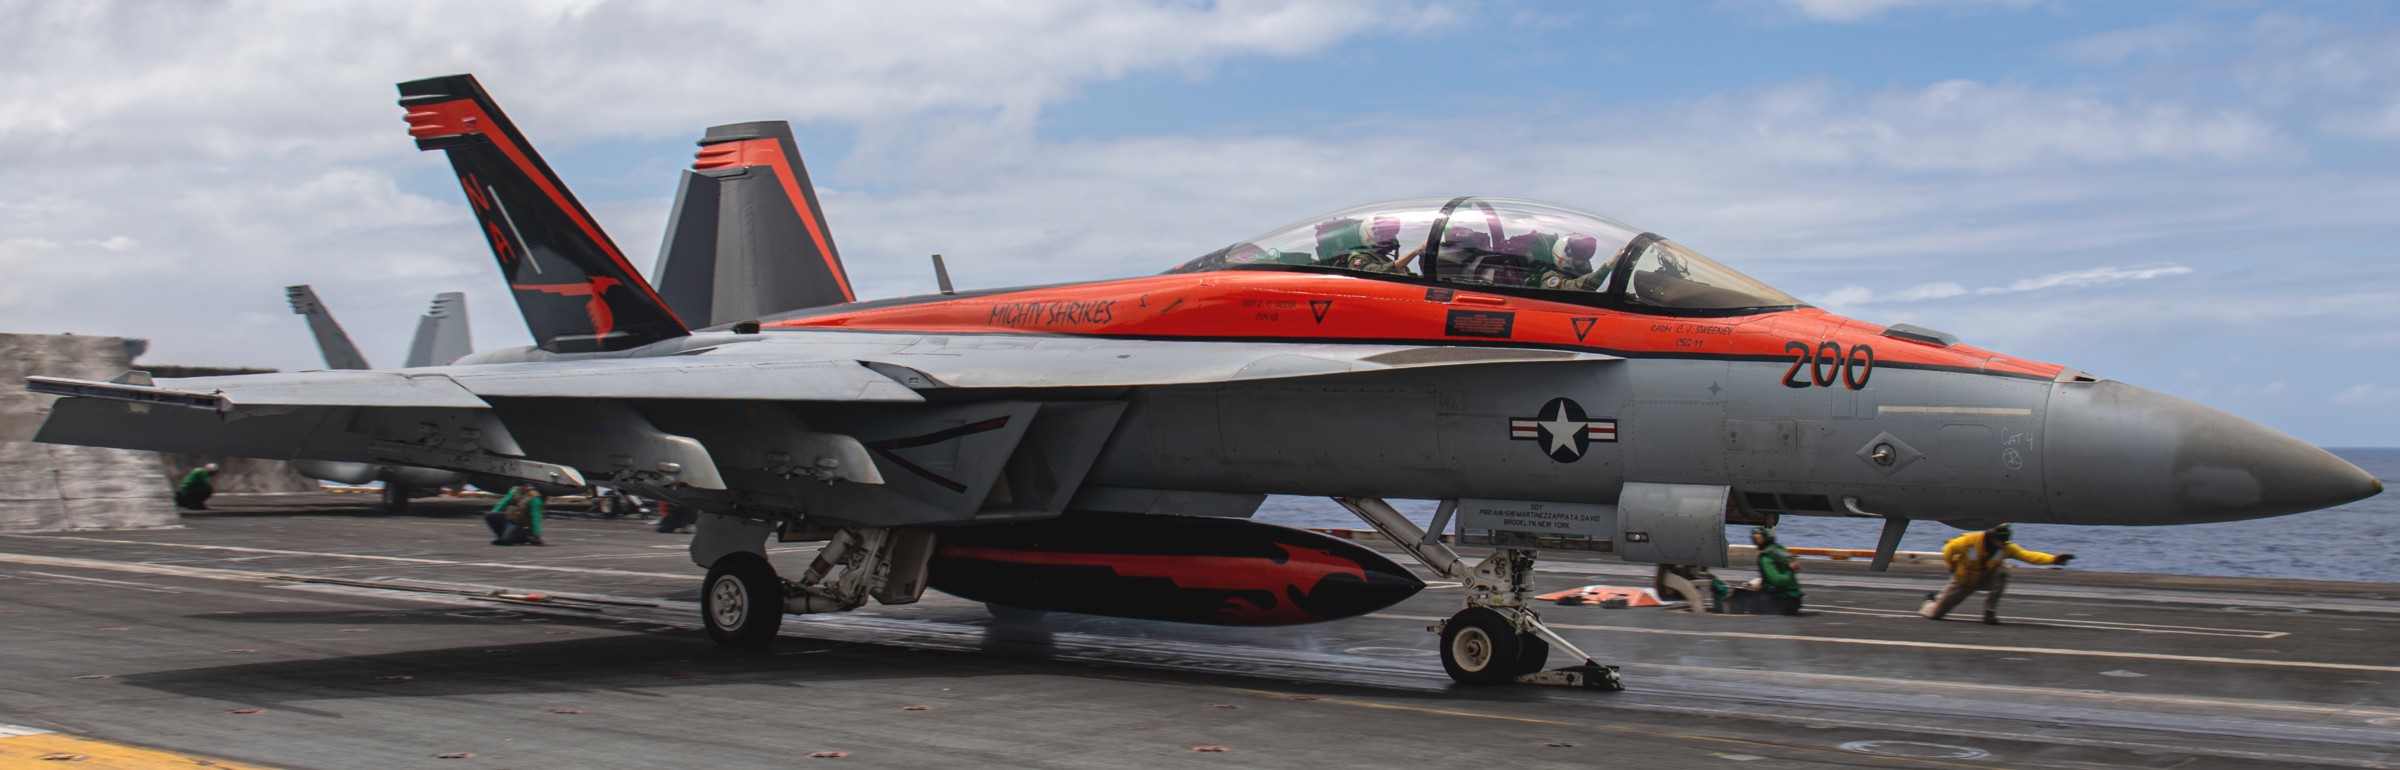 vfa-94 mighty shrikes strike fighter squadron f/a-18e super hornet cvw-17 uss nimitz cvn-68 us navy cag bird 105